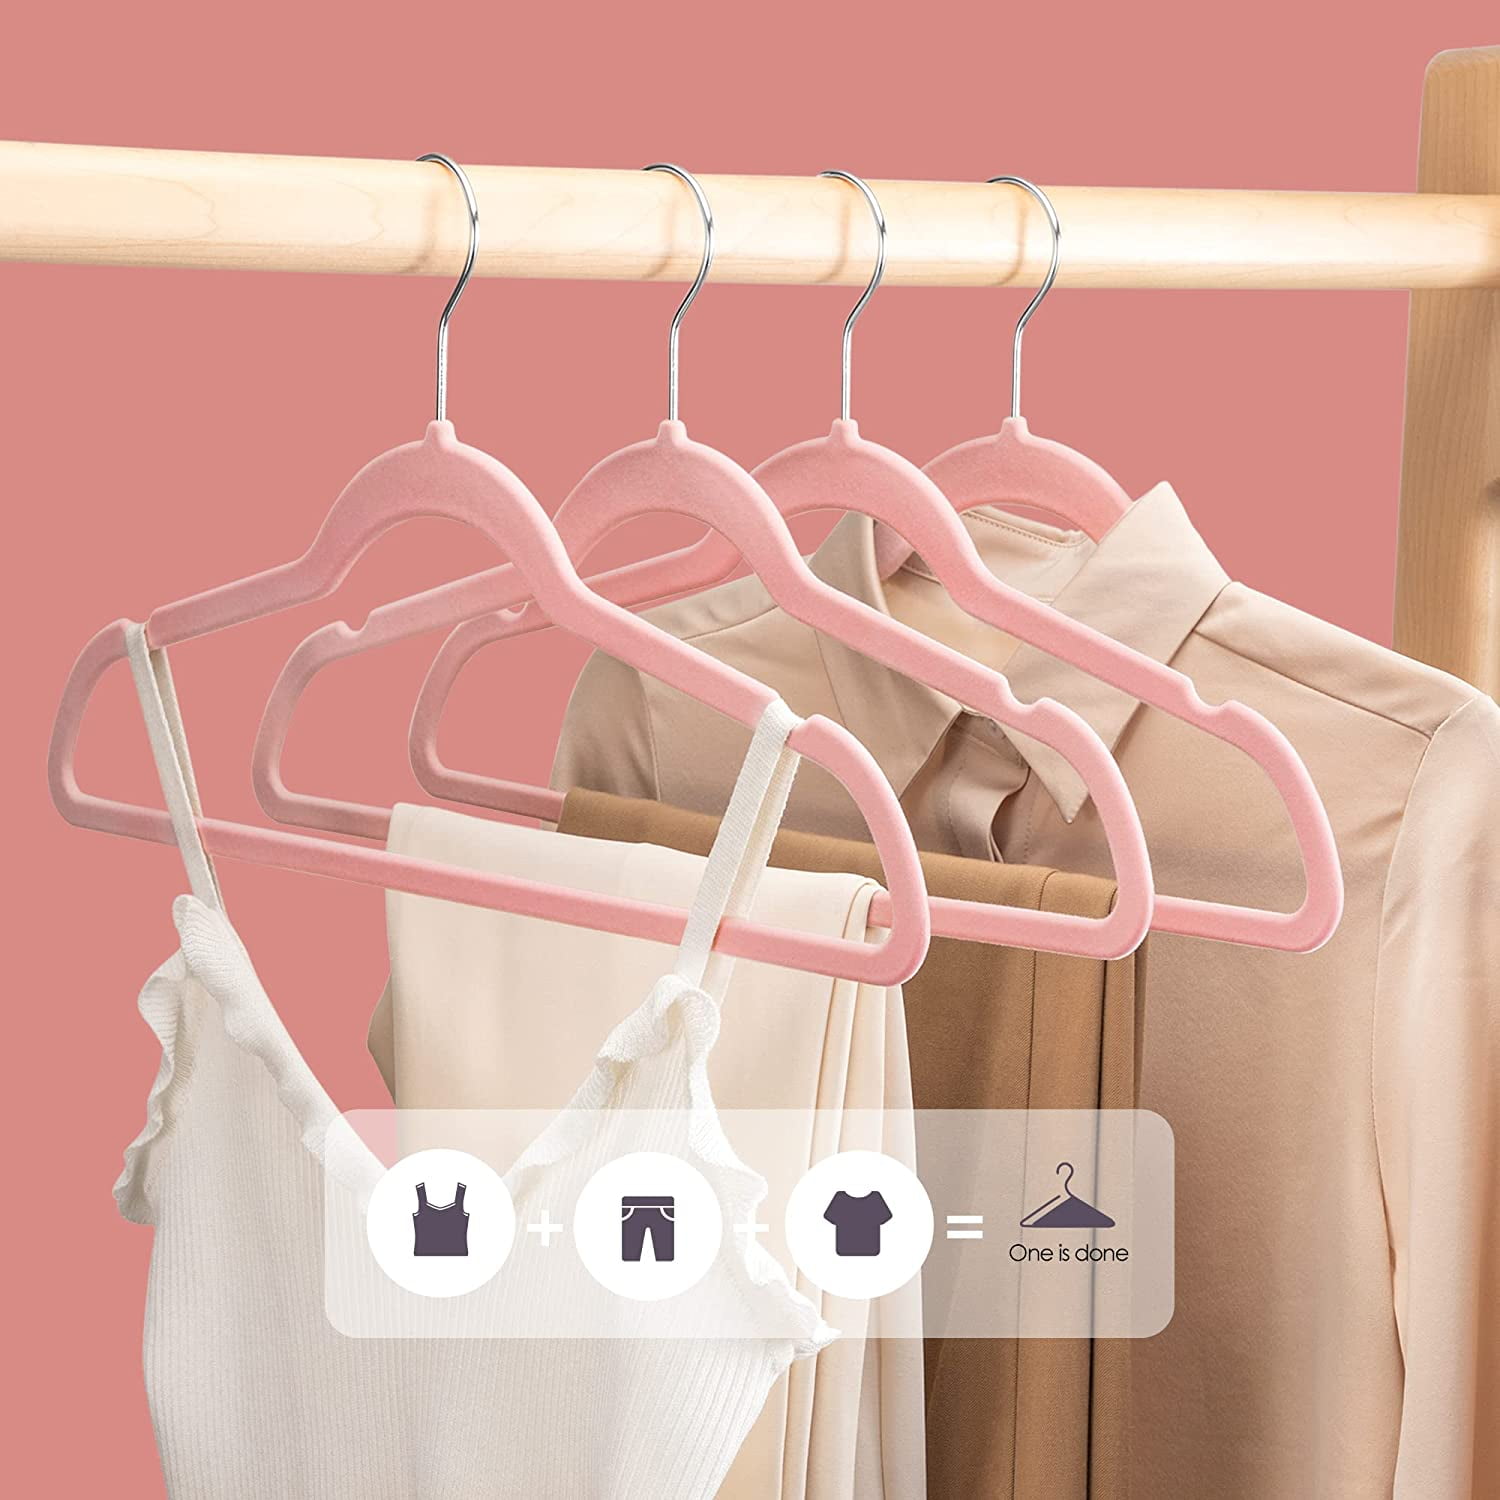 Velvet Hangers 60 Pack Blush – Heavy Duty Clothes Hangers Space Saving - Non Slip Felt Hangers for Closet - Perchas Ganchos Para Colgar Ropa Hangars